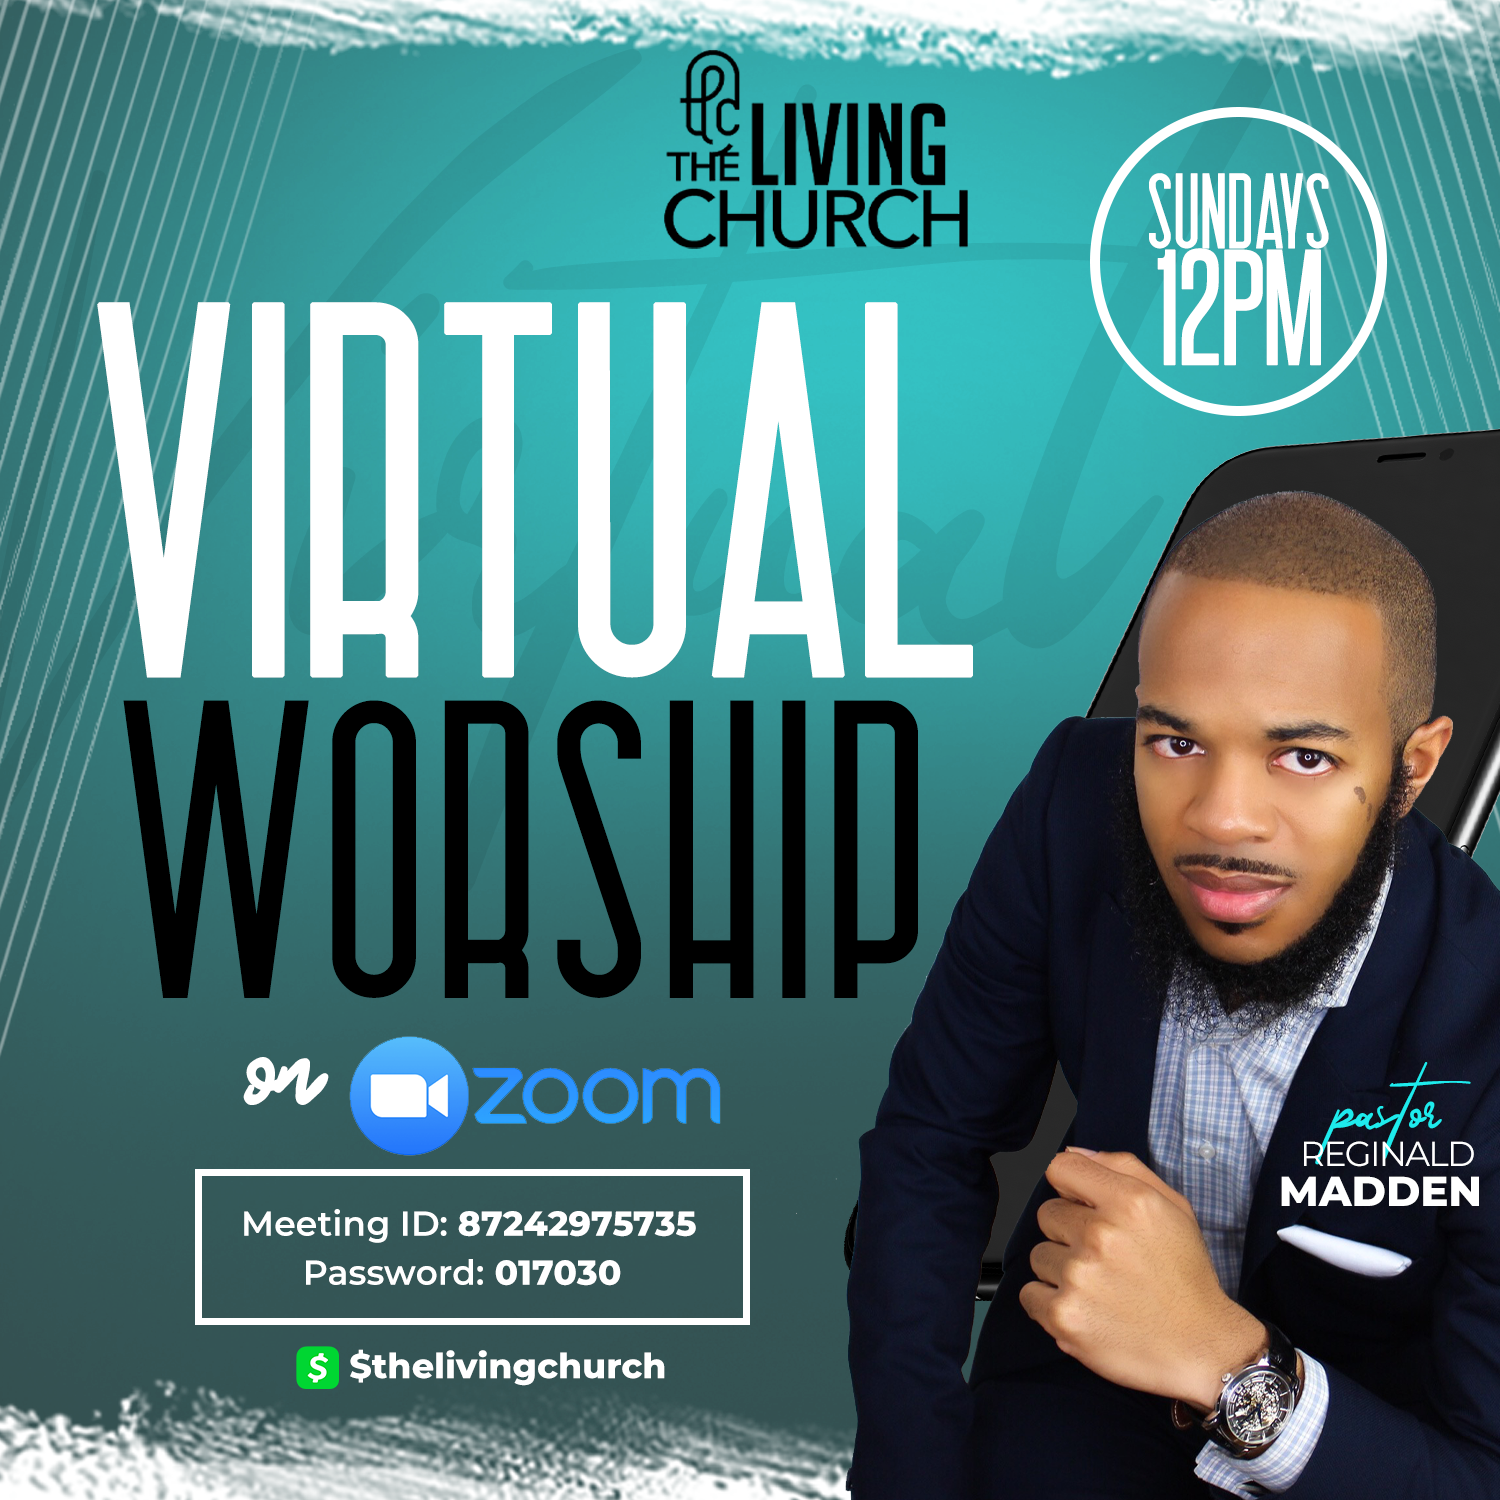 Welcome to virtual worship image